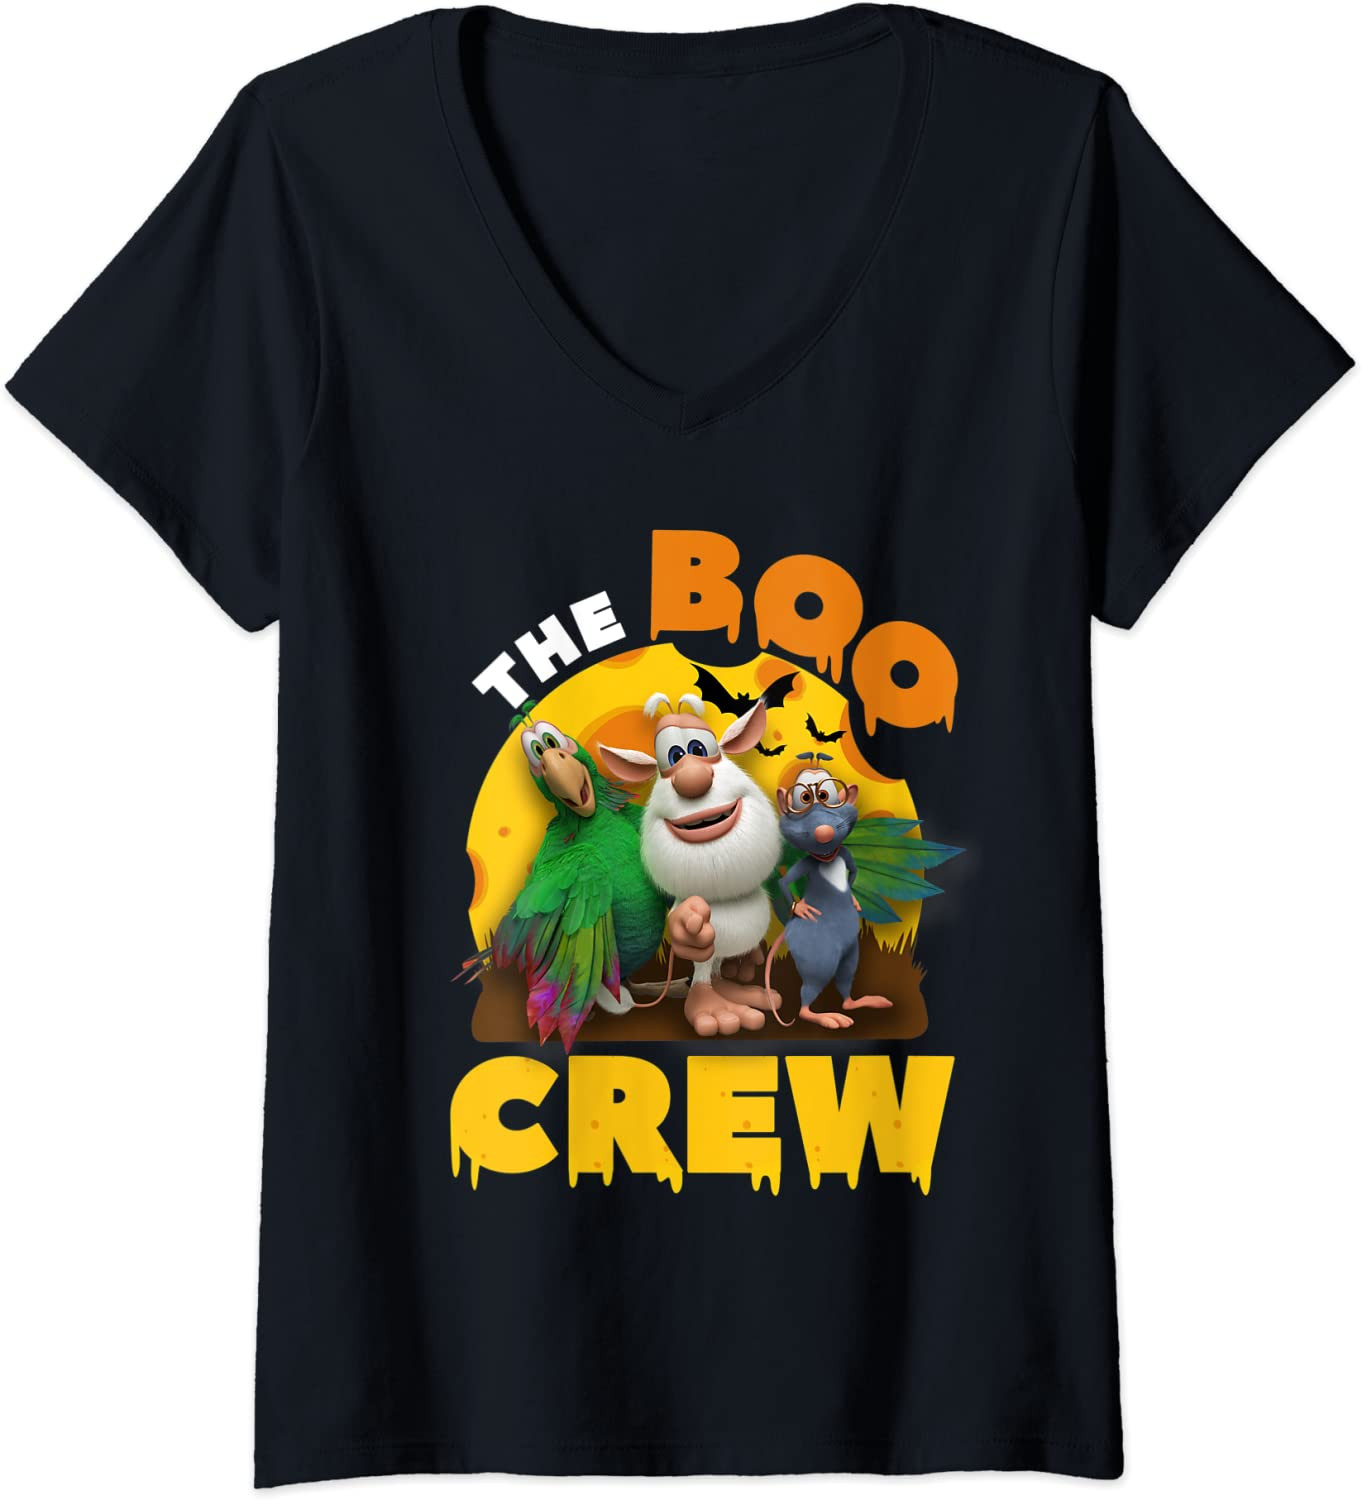 The Boo Crew Halloween Costume For Kids Boys Girls T-Shirt